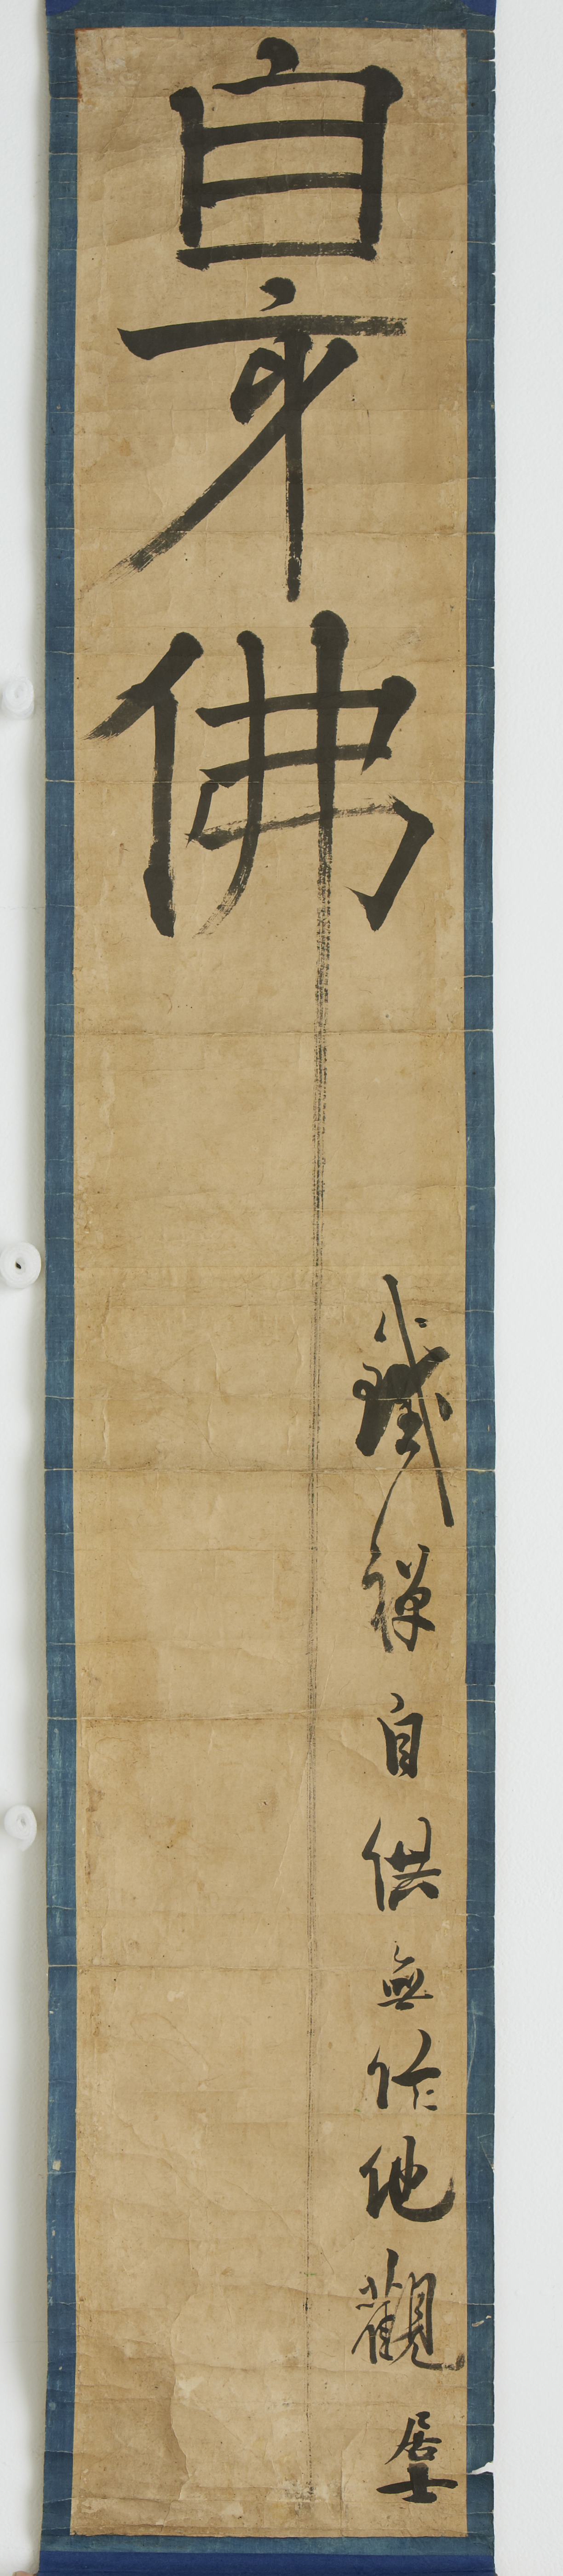 Chusa Kim Jeong-hui (秋史 金正喜, 1786~1856), Ja-shin-bul 自身佛, mid 19th century, ink on paper 紙本墨書, 137.5x21.5cm ⓒHakgojae Gallery